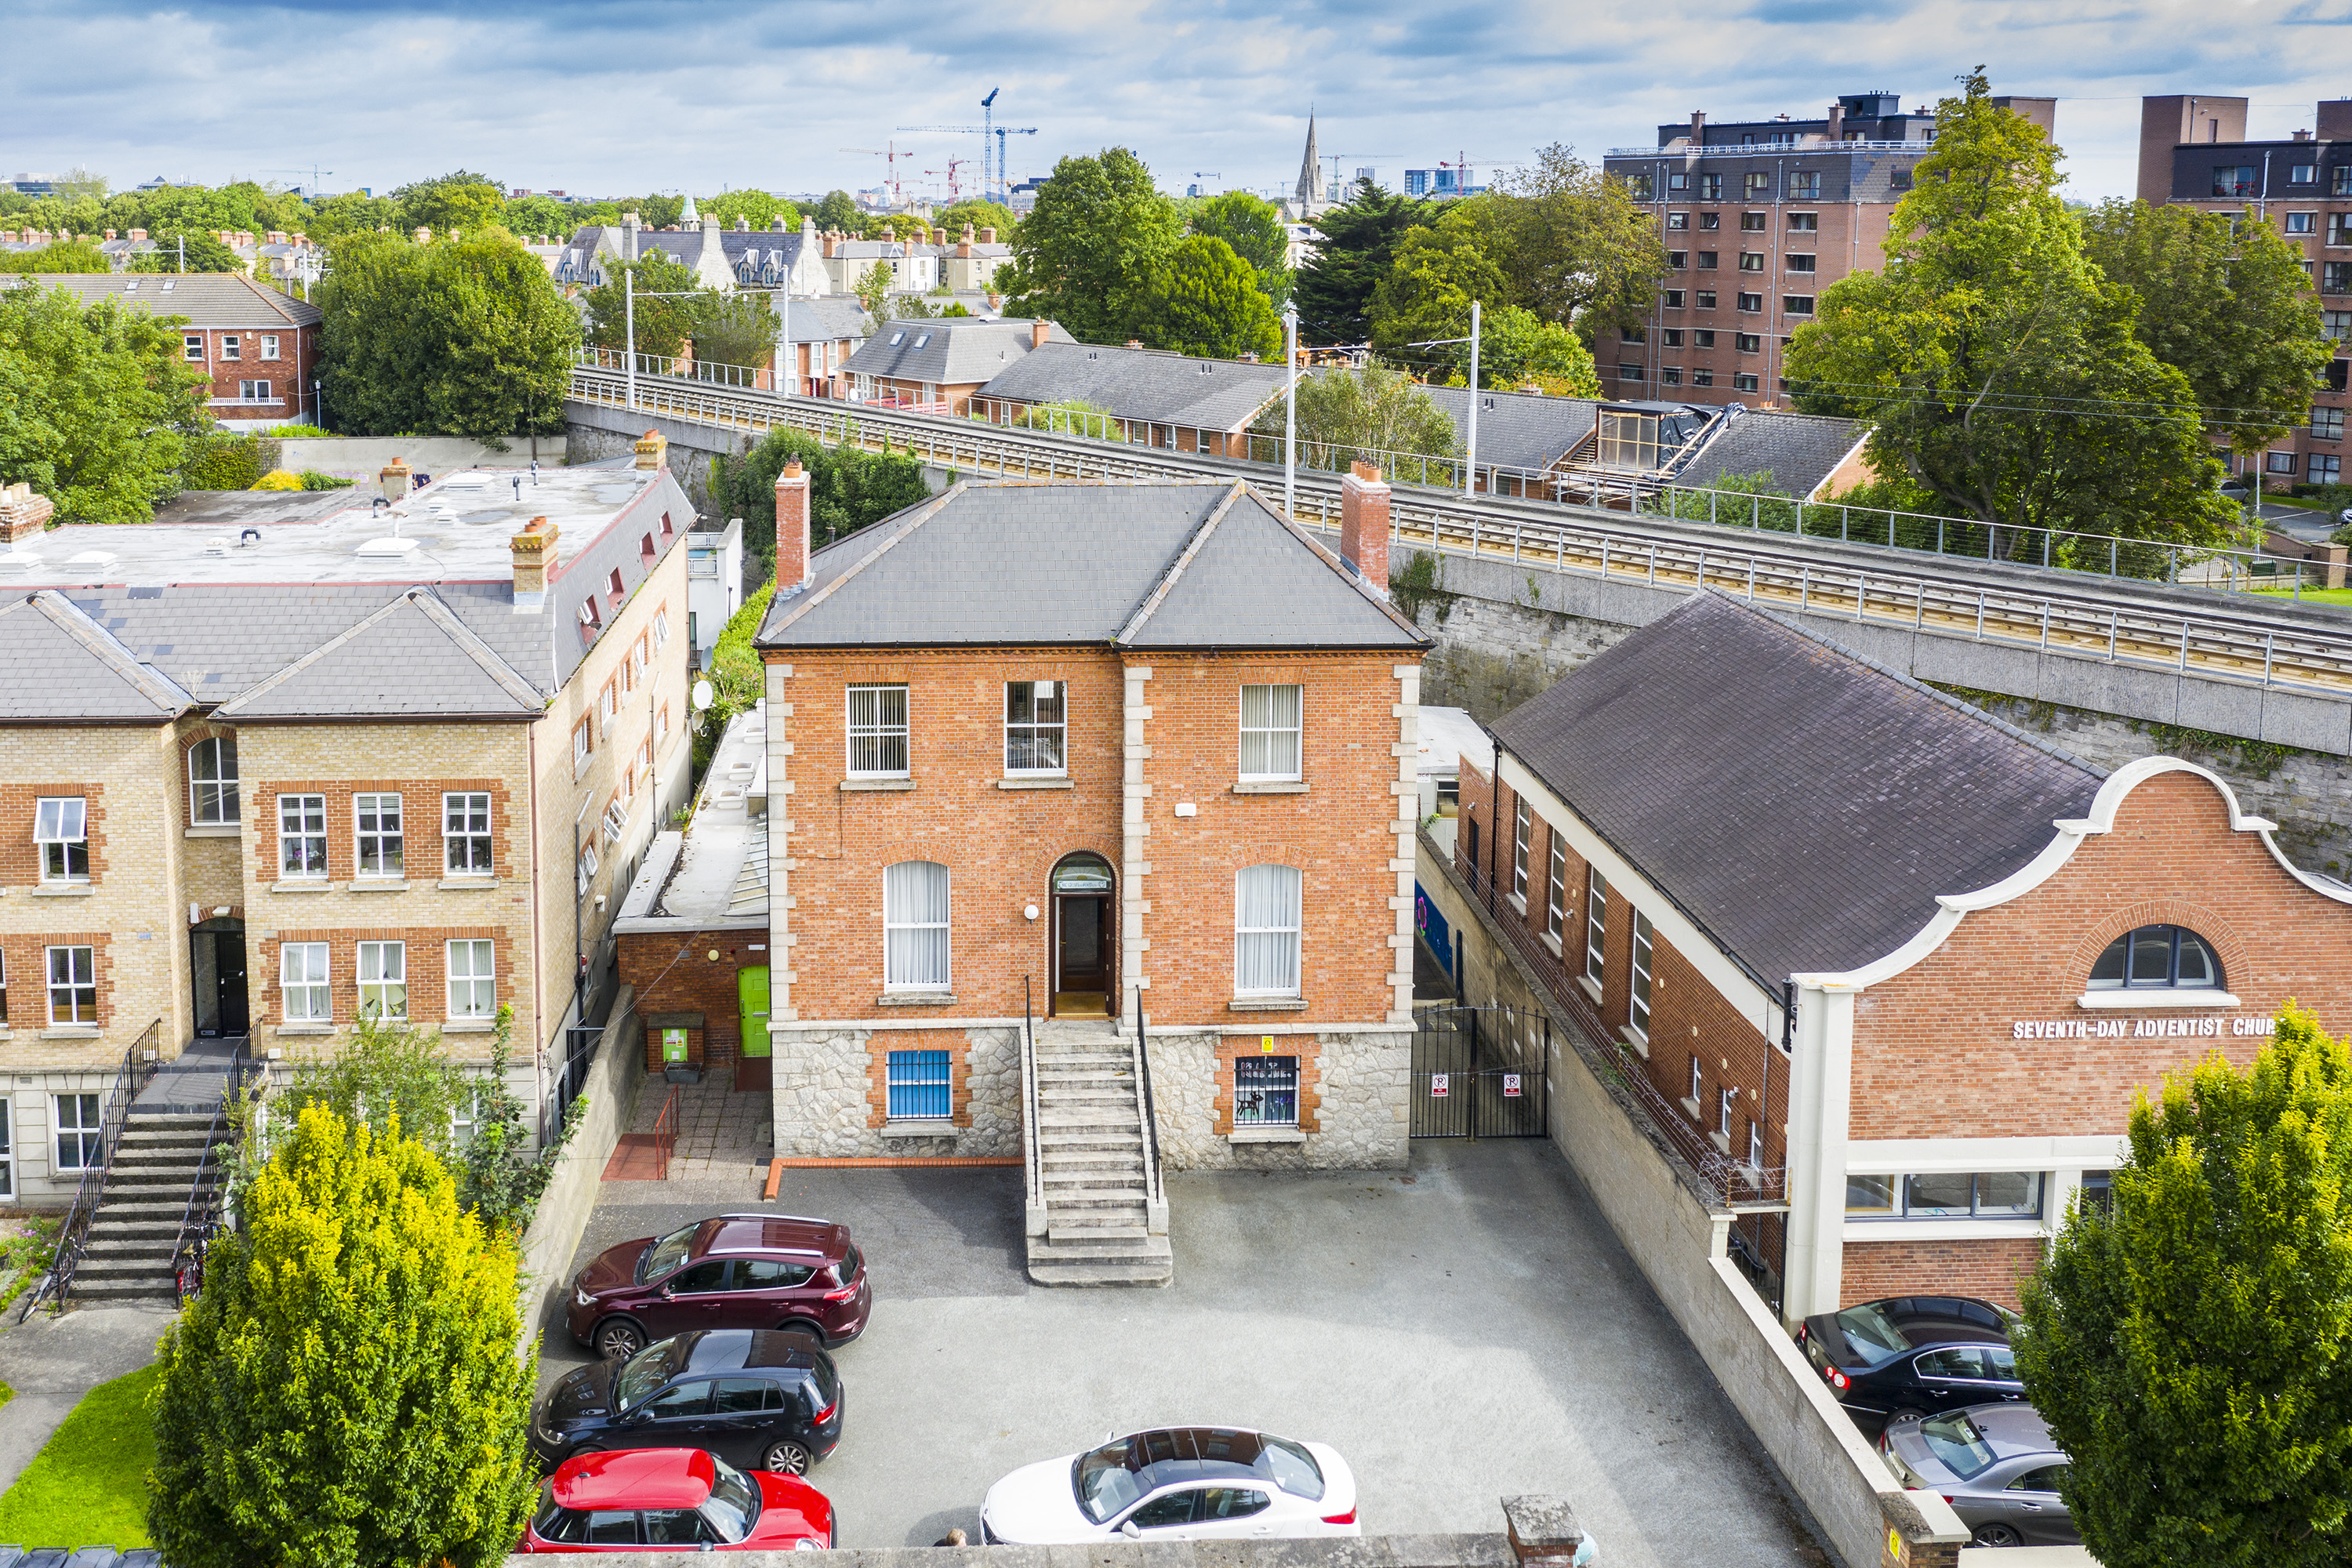 Dublin 6 period pile primed for residential development at €2.25m